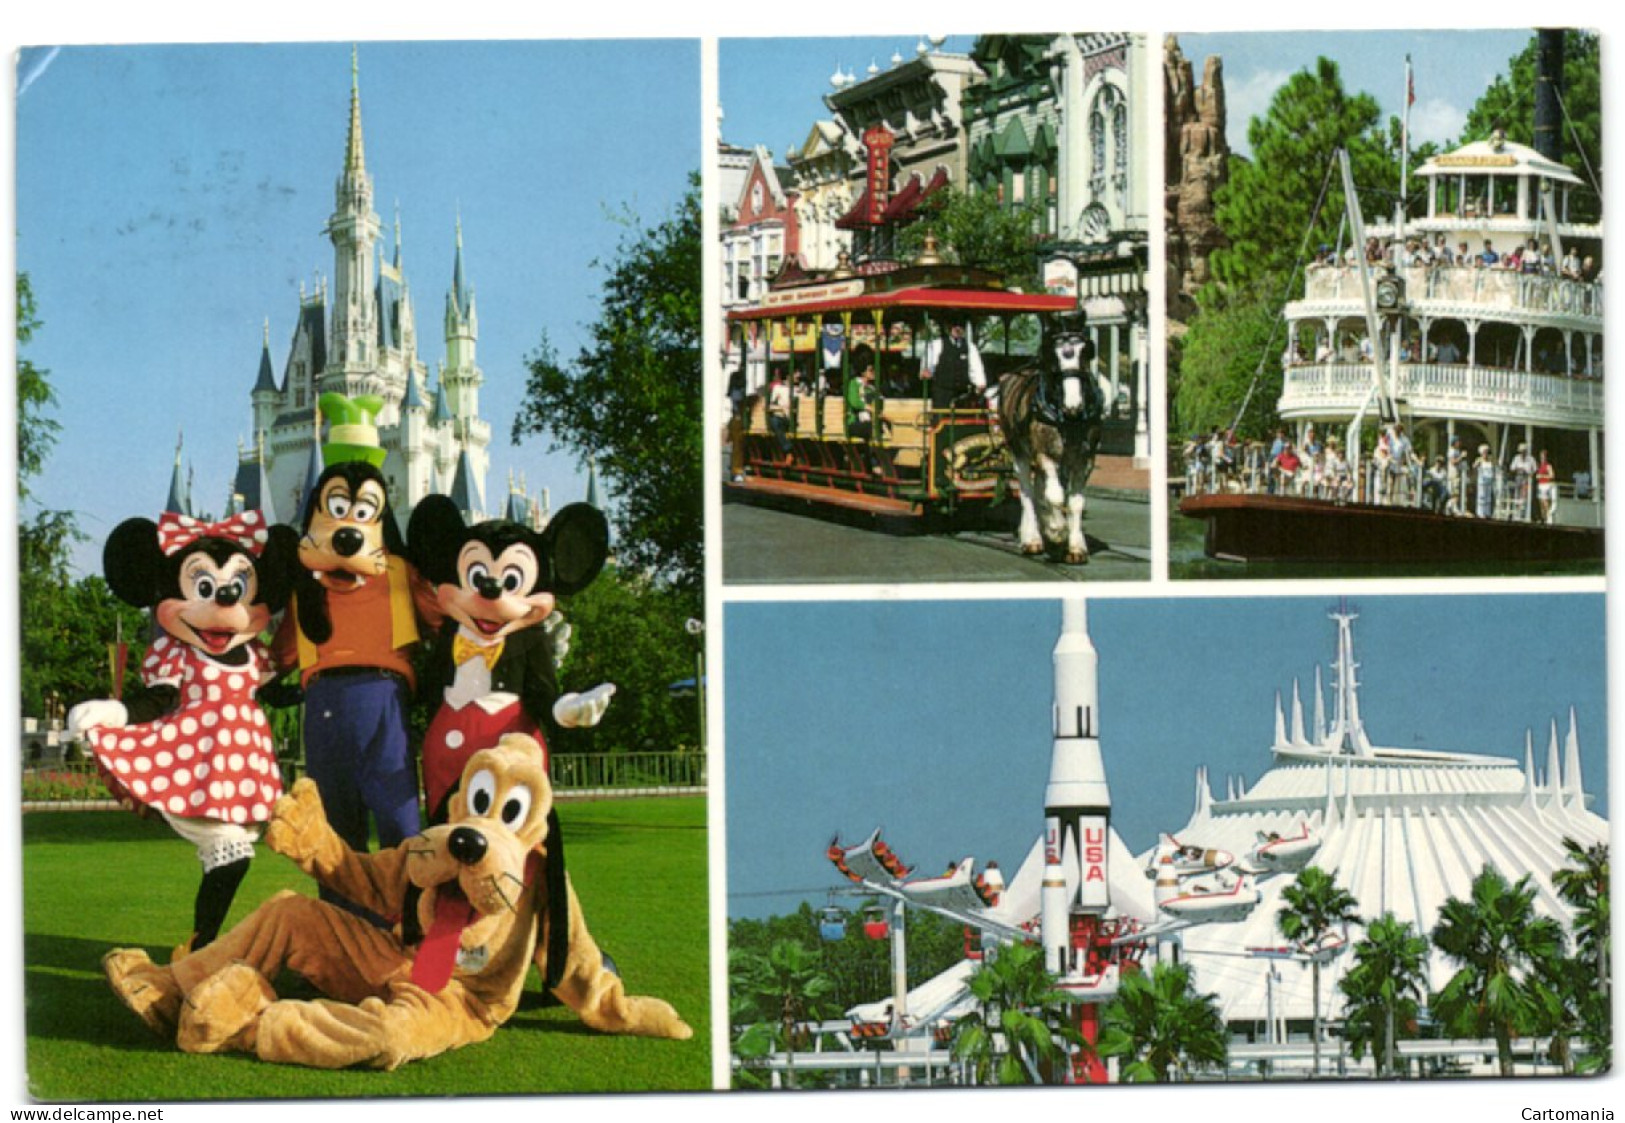 Walt Disney World - Mickey - Minnie - Goofy And Pluto Welcome Visitors - Orlando